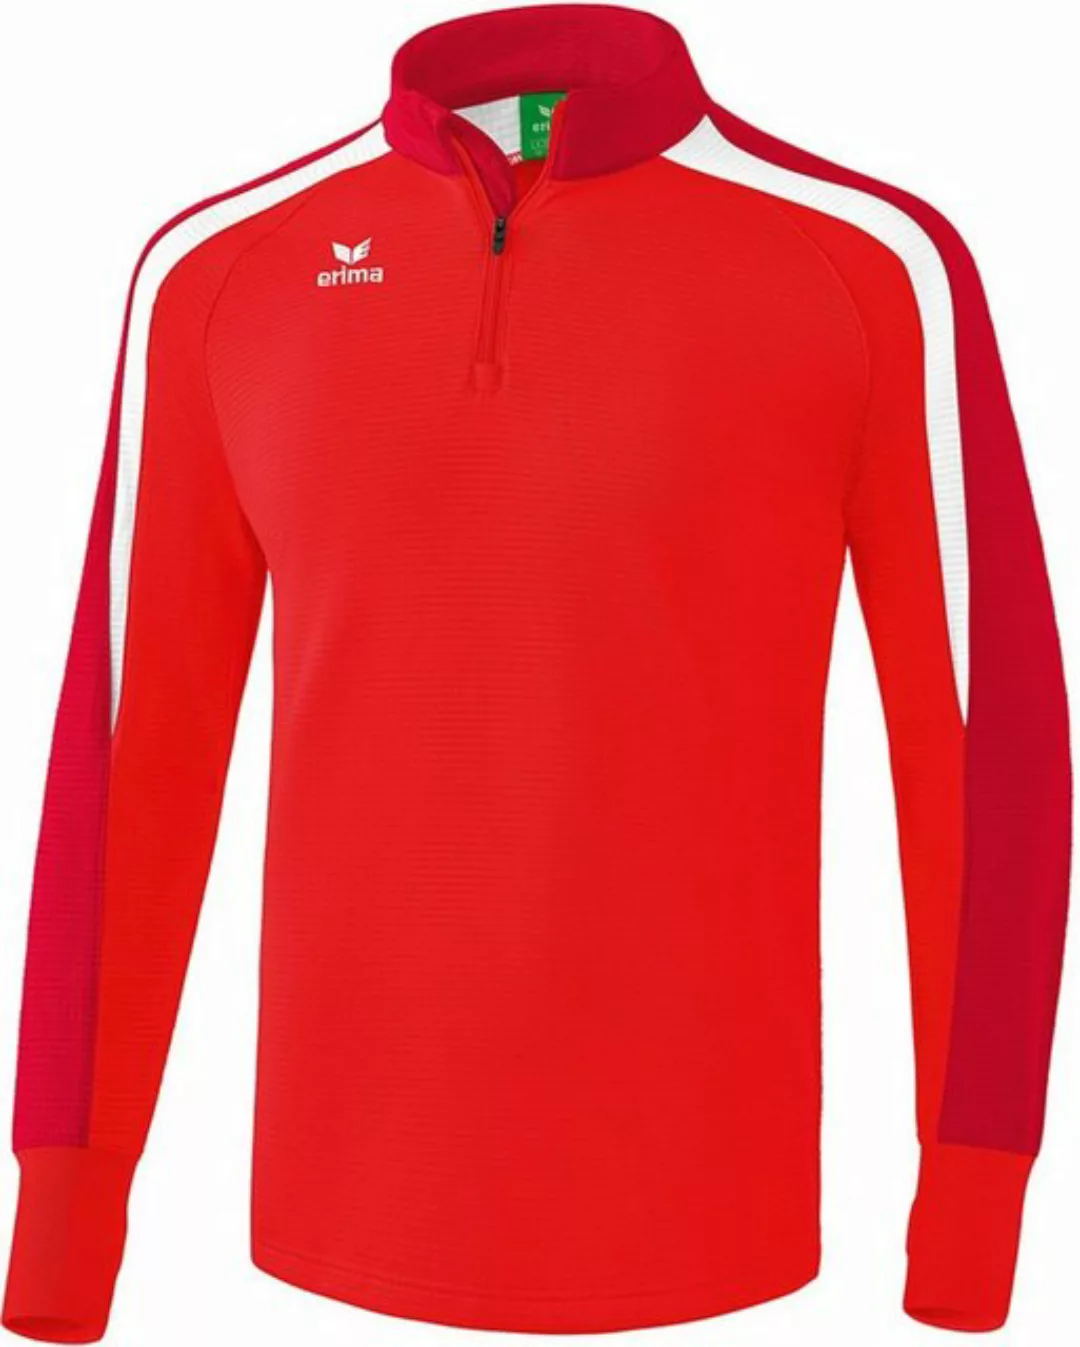 Erima Longsweatshirt LIGA LINE 2.0 training top red/tango red/white günstig online kaufen